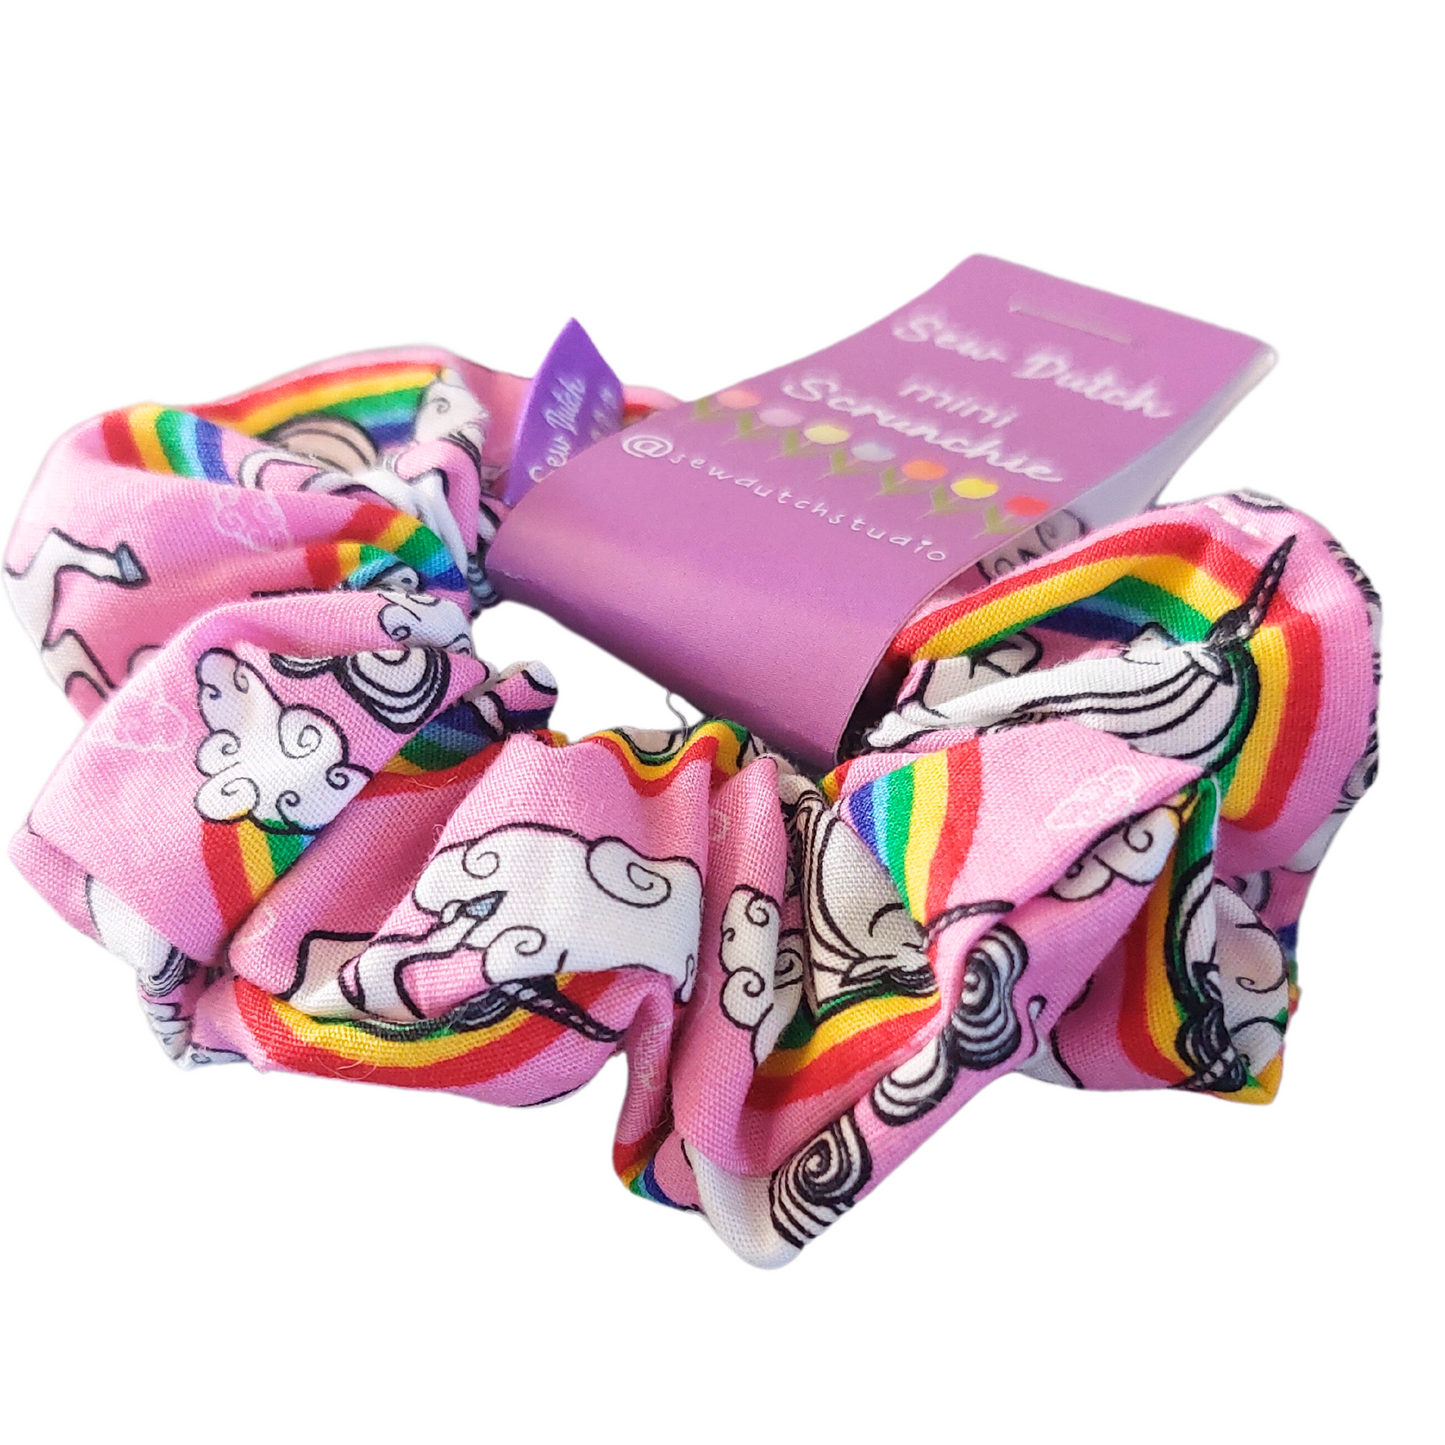 Mini scrunchie pink rainbows and unicorns